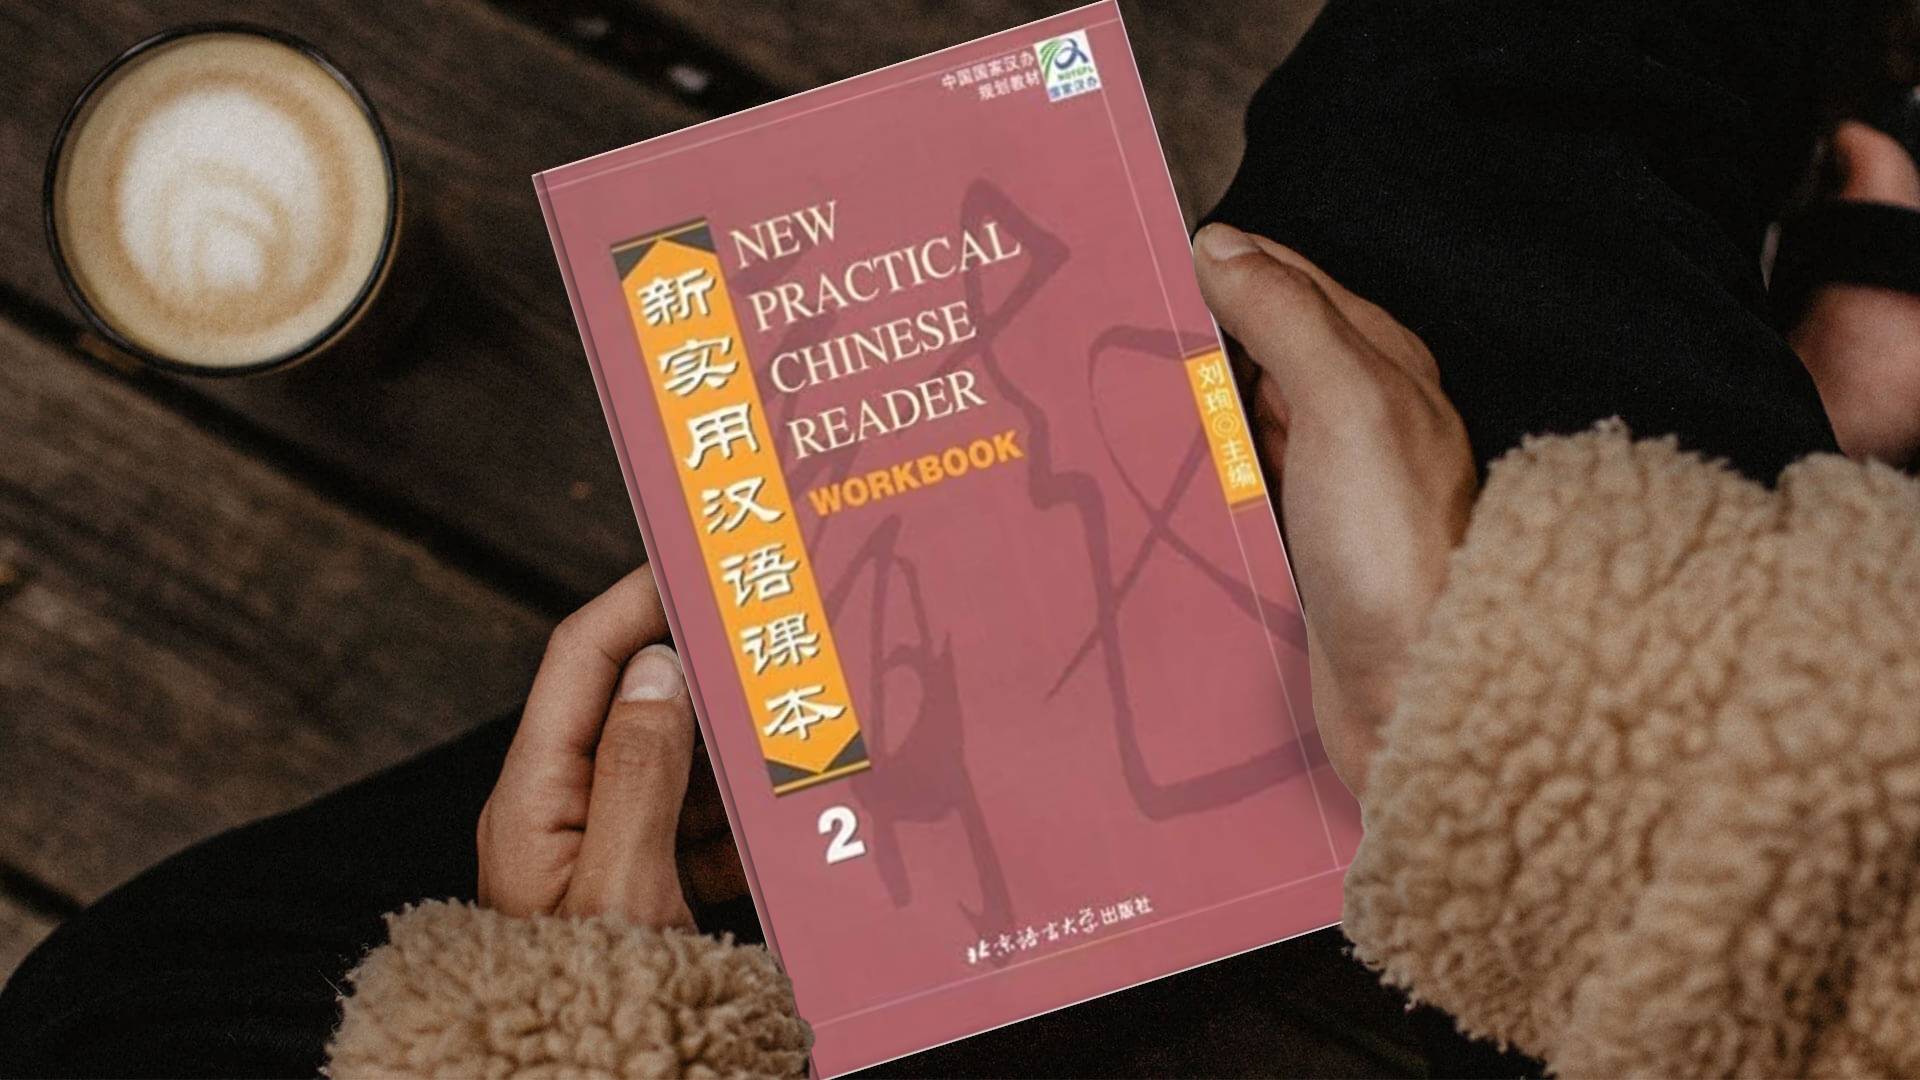 خرید کتاب زبان چینی | فروشگاه اینترنتی کتاب زبان | New Practical Chinese Reader Volume 2 Workbook | نیو پرکتیکال چاینیز ریدر ورک بوک دو